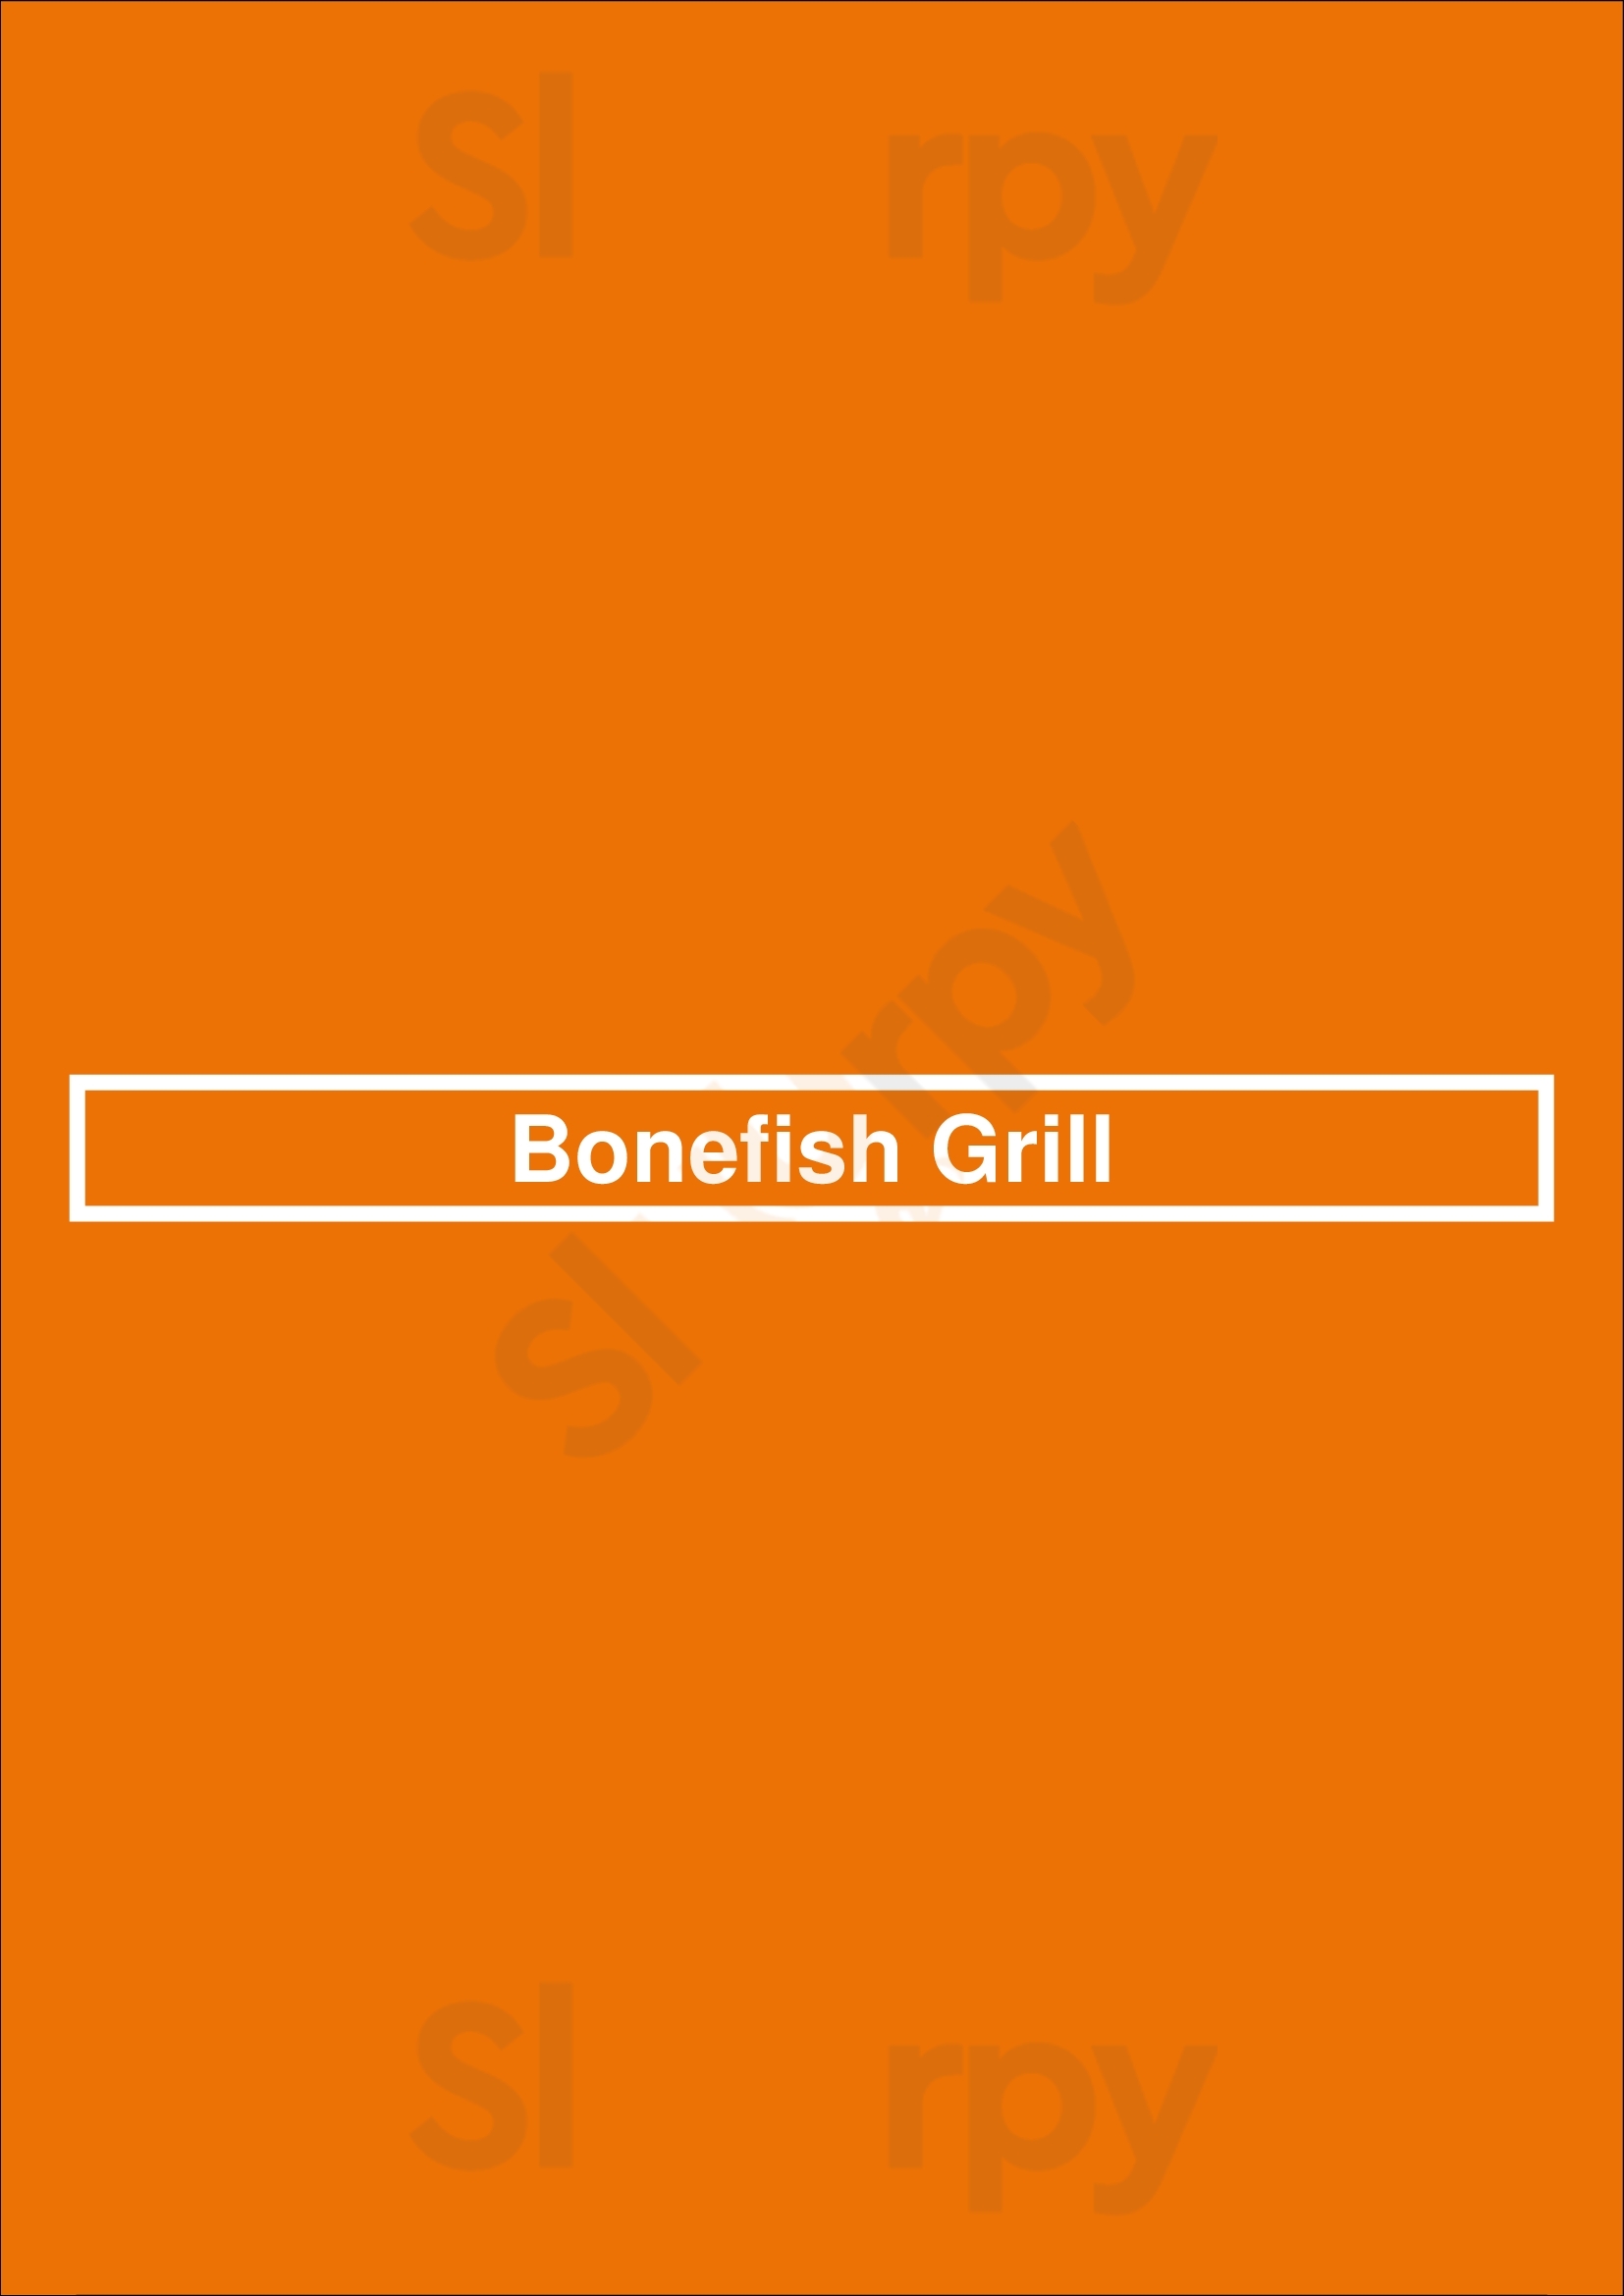 Bonefish Grill Newport News Menu - 1